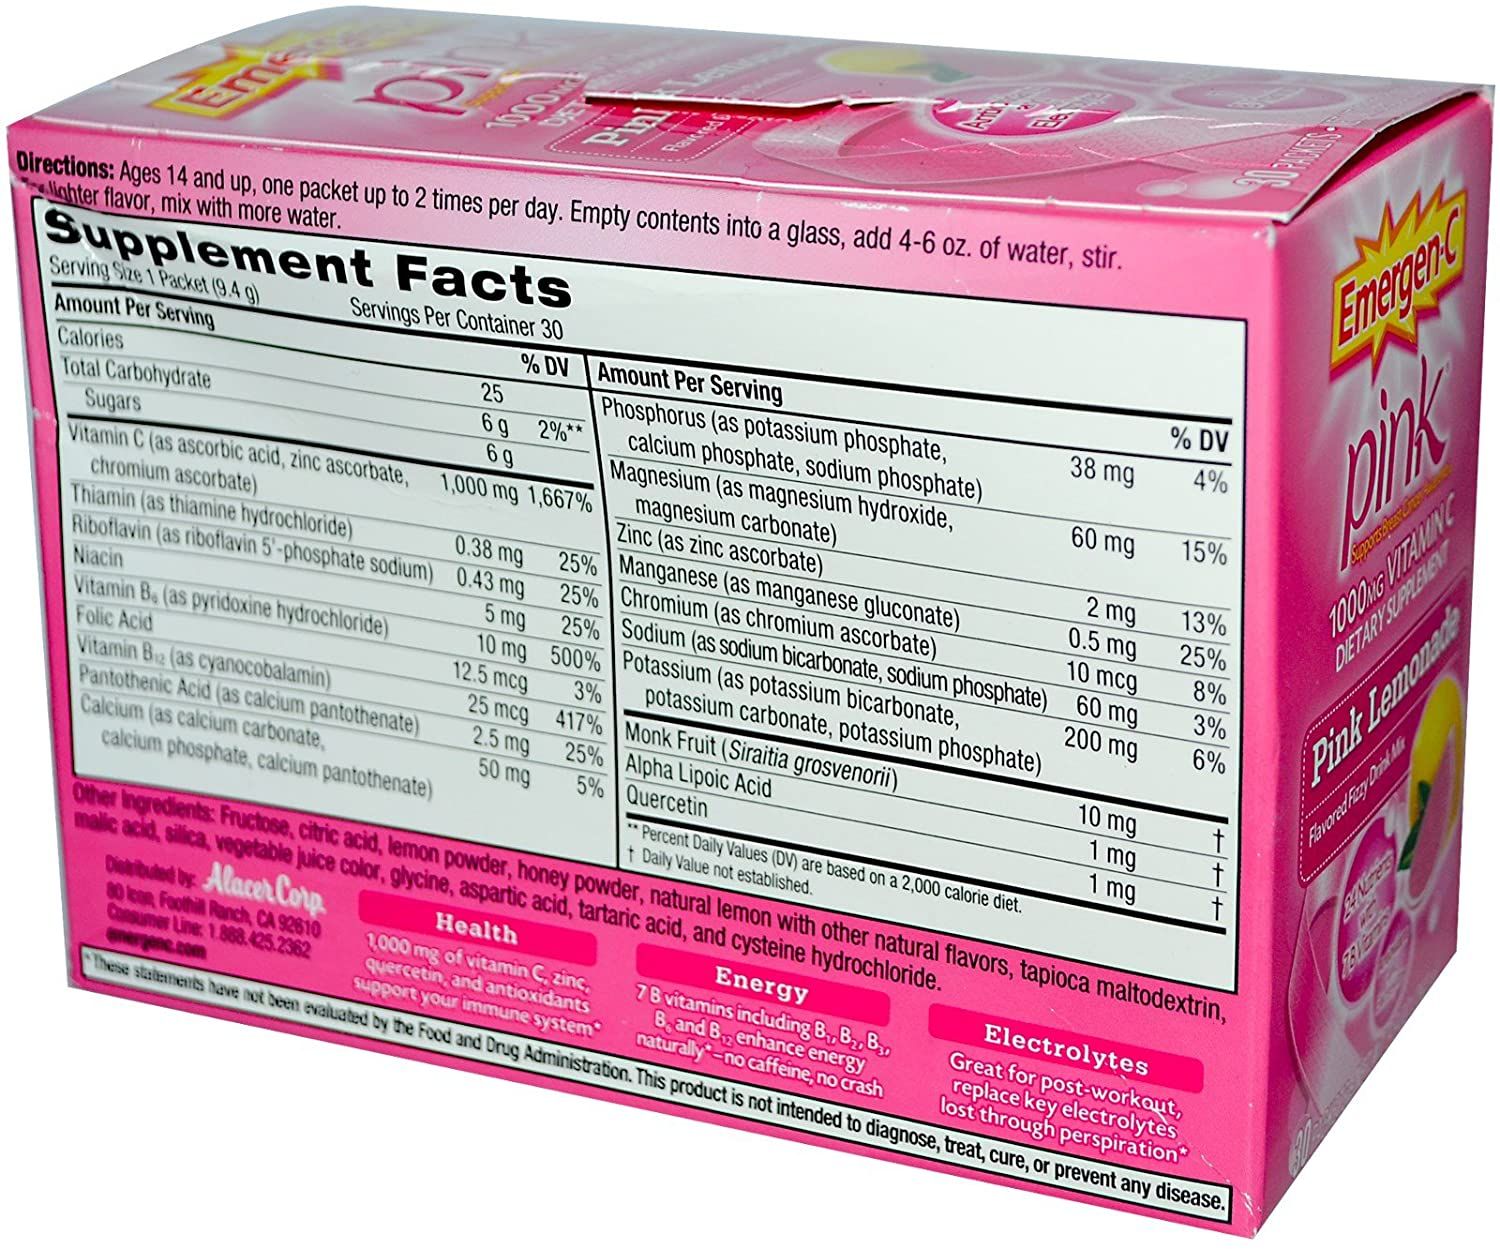 Emergen-C 1000 mg Vitamin C Fizzy Drink Mix, Pink Lemonade - 30 ct